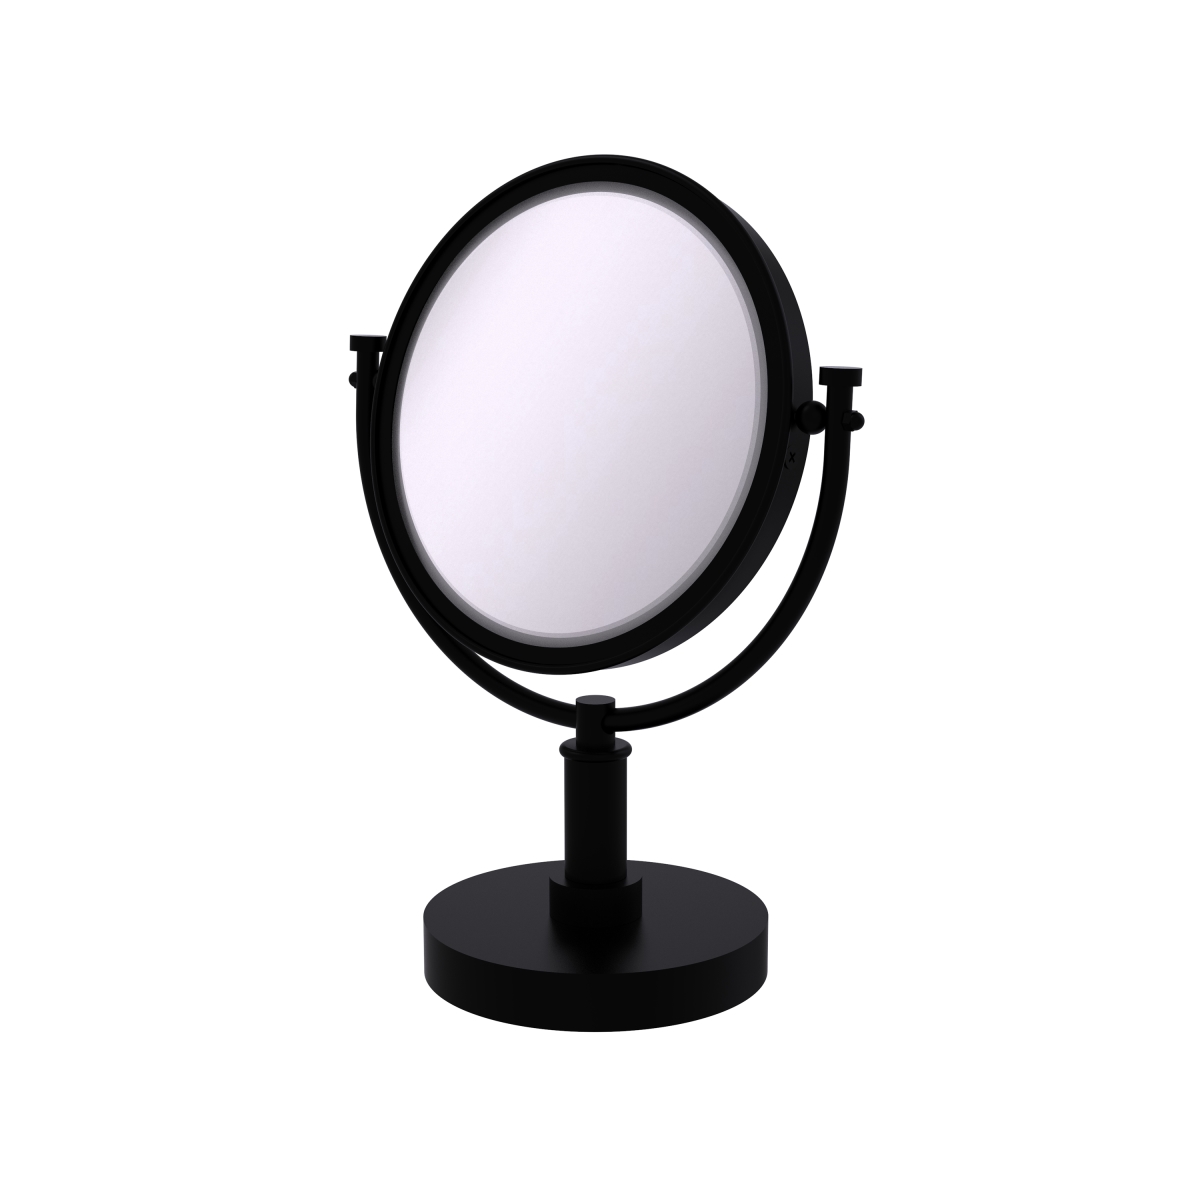 Dm-4-2x-bkm 8 In. Vanity Top Make-up Mirror 2x Magnification, Matte Black